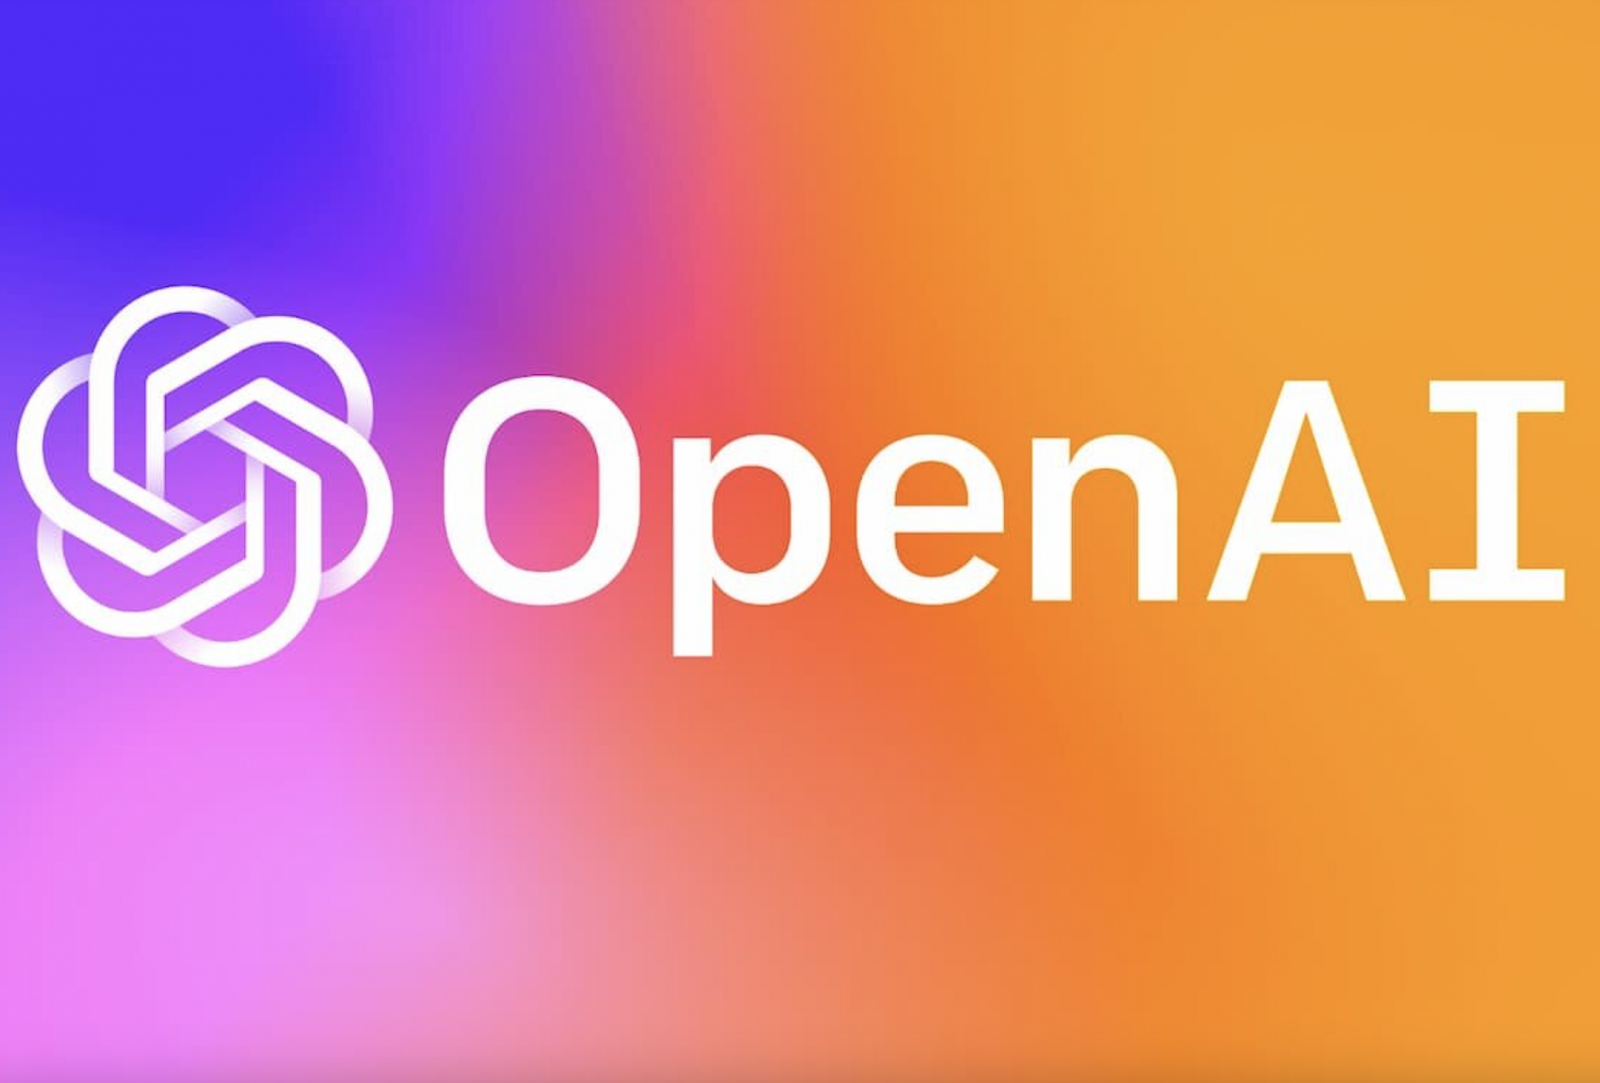 OpenAI's logo